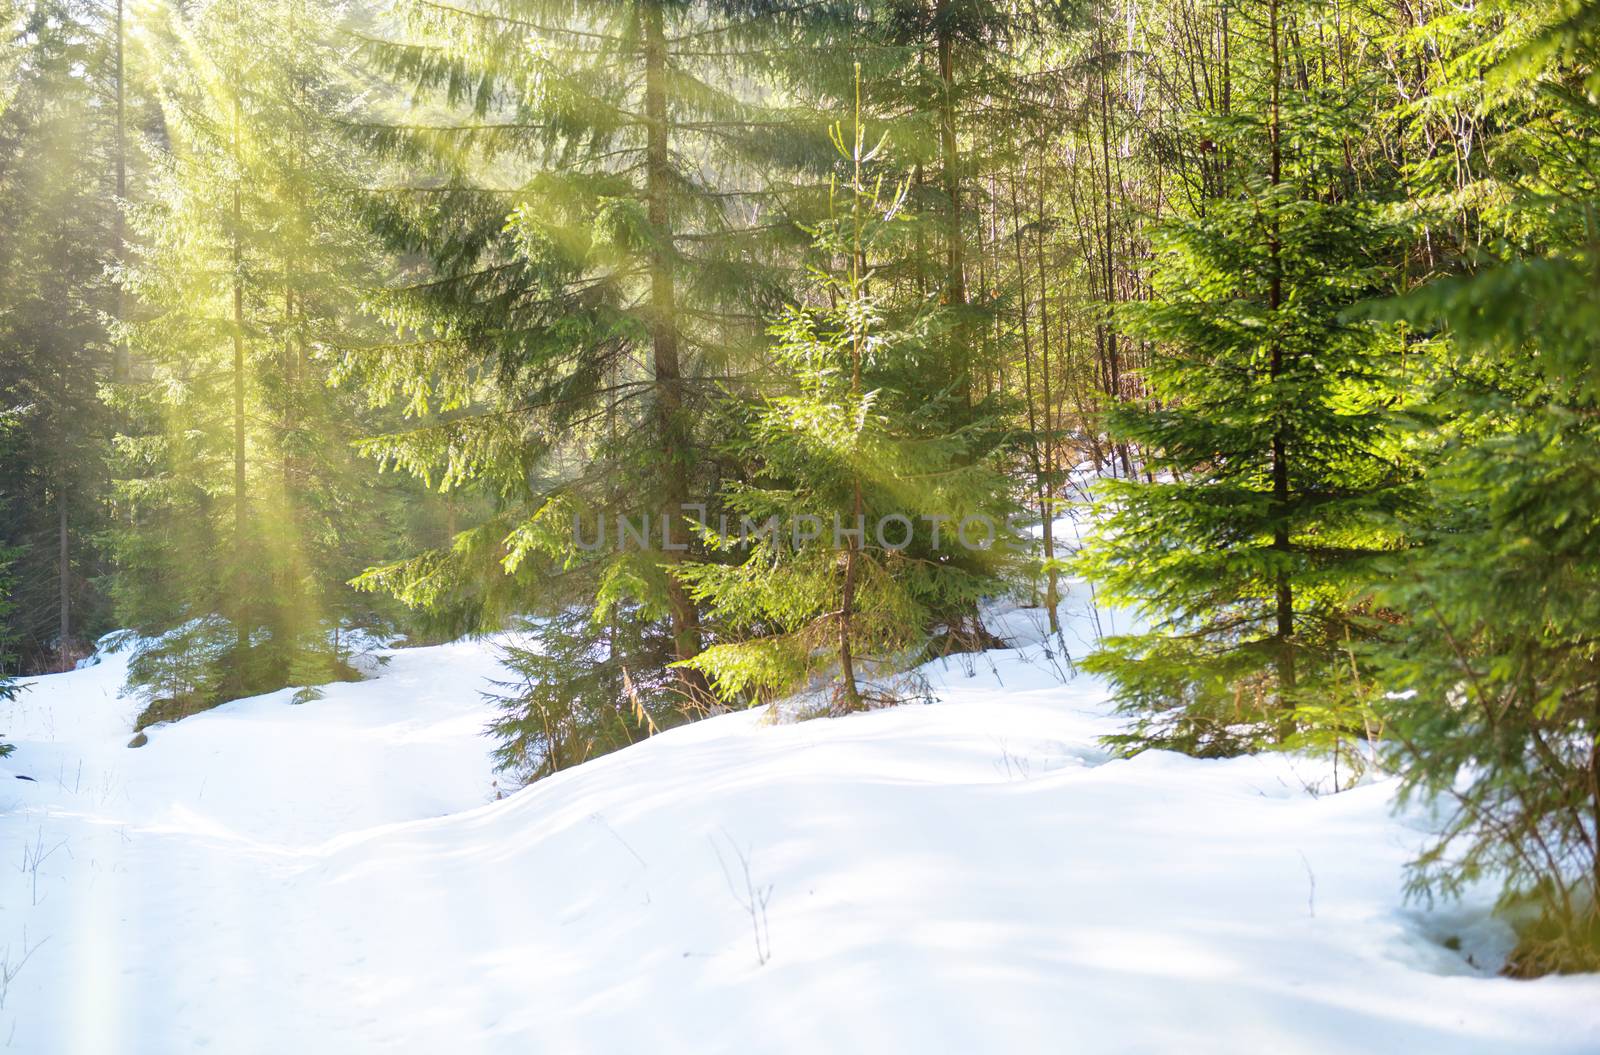 Sun light in the winter forest by vapi